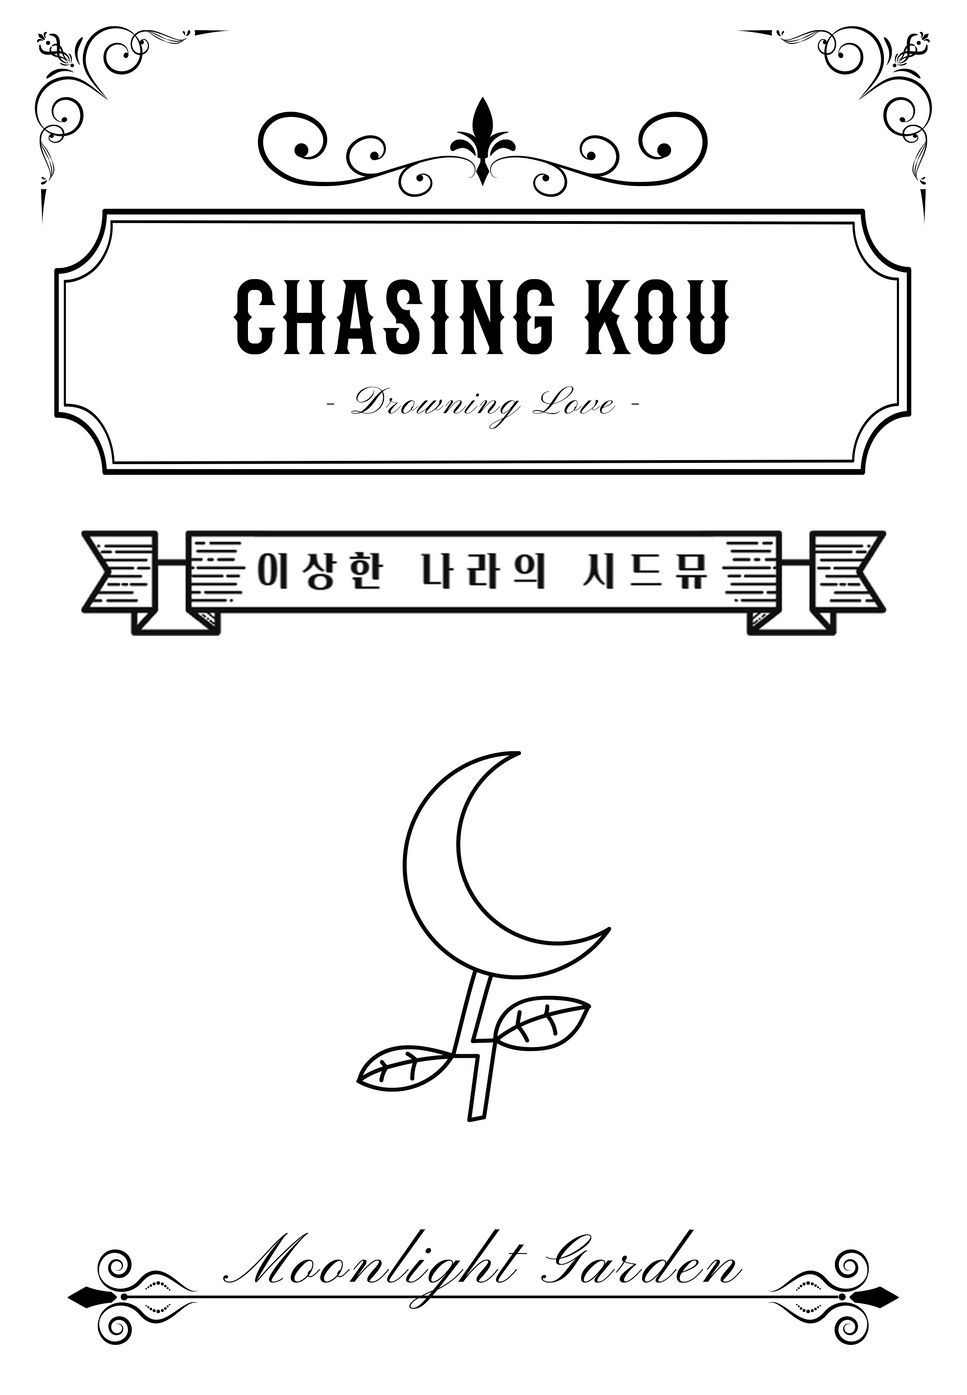 Drowning Love - Chasing Kou by Moonlight Garden